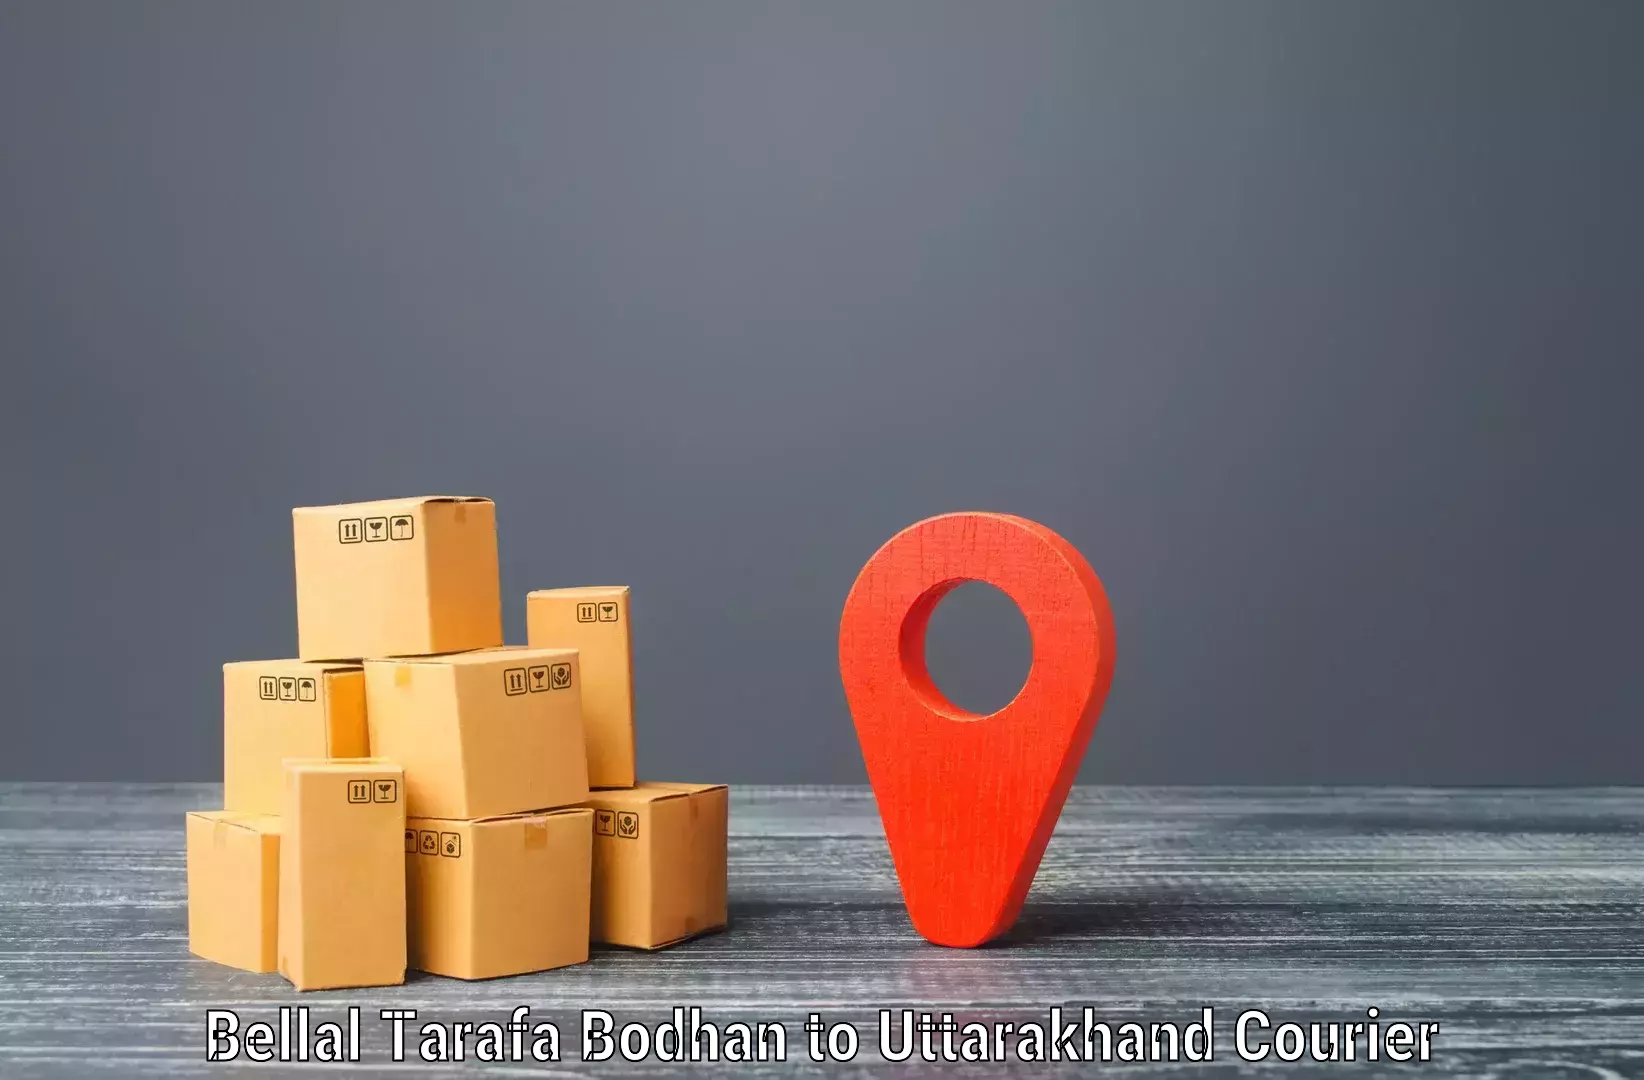 Global logistics network Bellal Tarafa Bodhan to Lansdowne